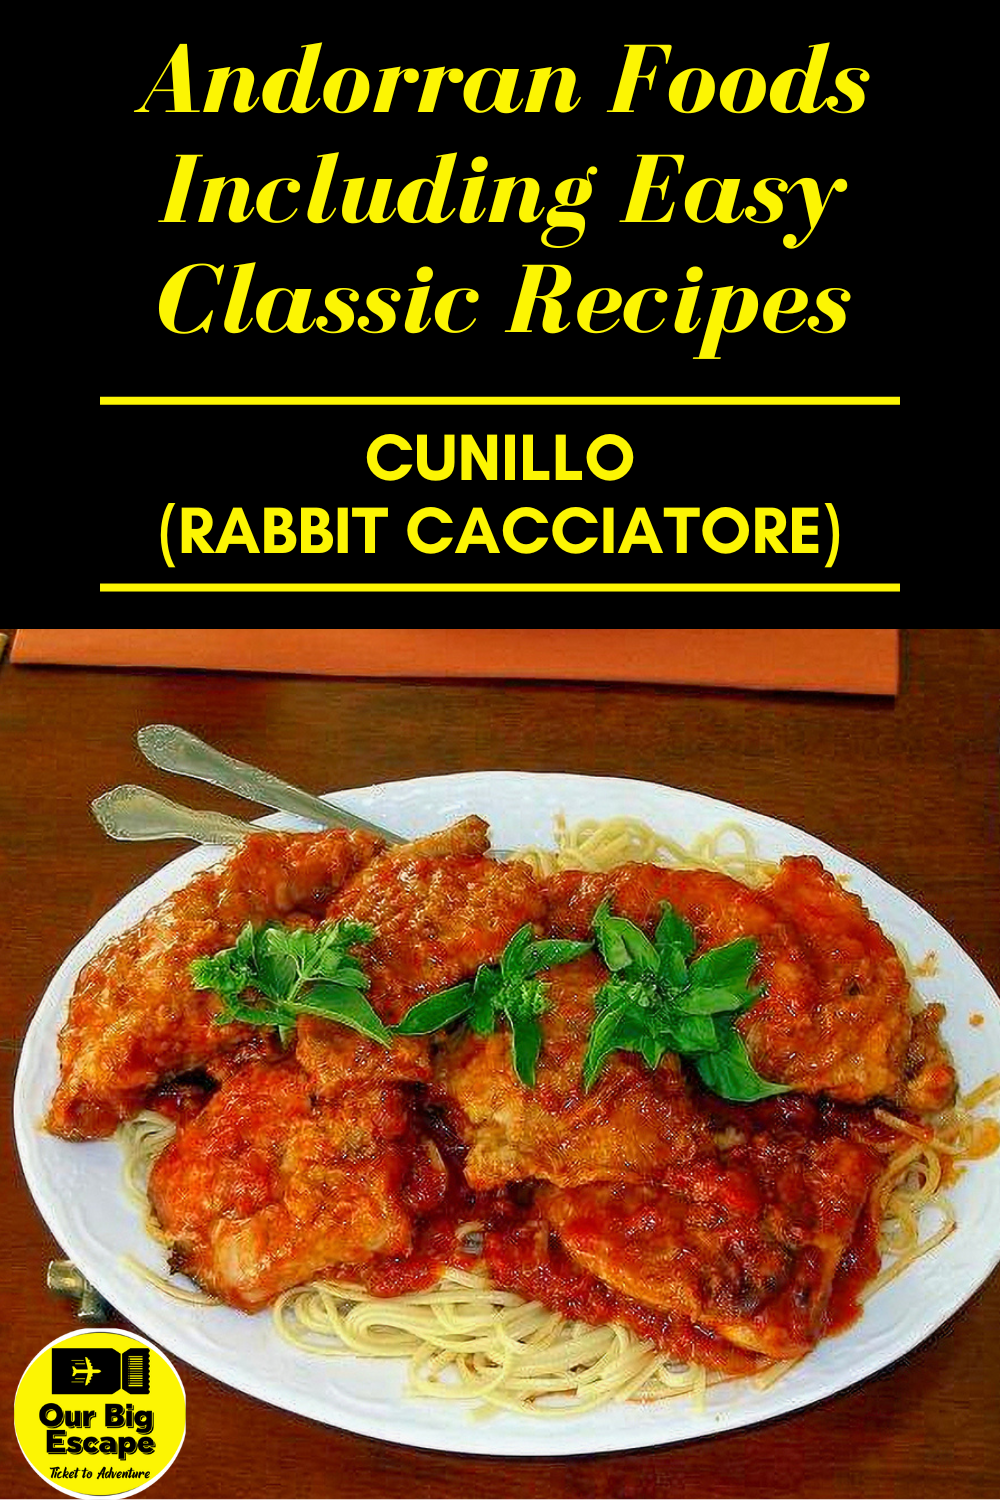 Cunillo (Rabbit Cacciatore) - 17 Andorran Foods Including Easy Classic Recipes